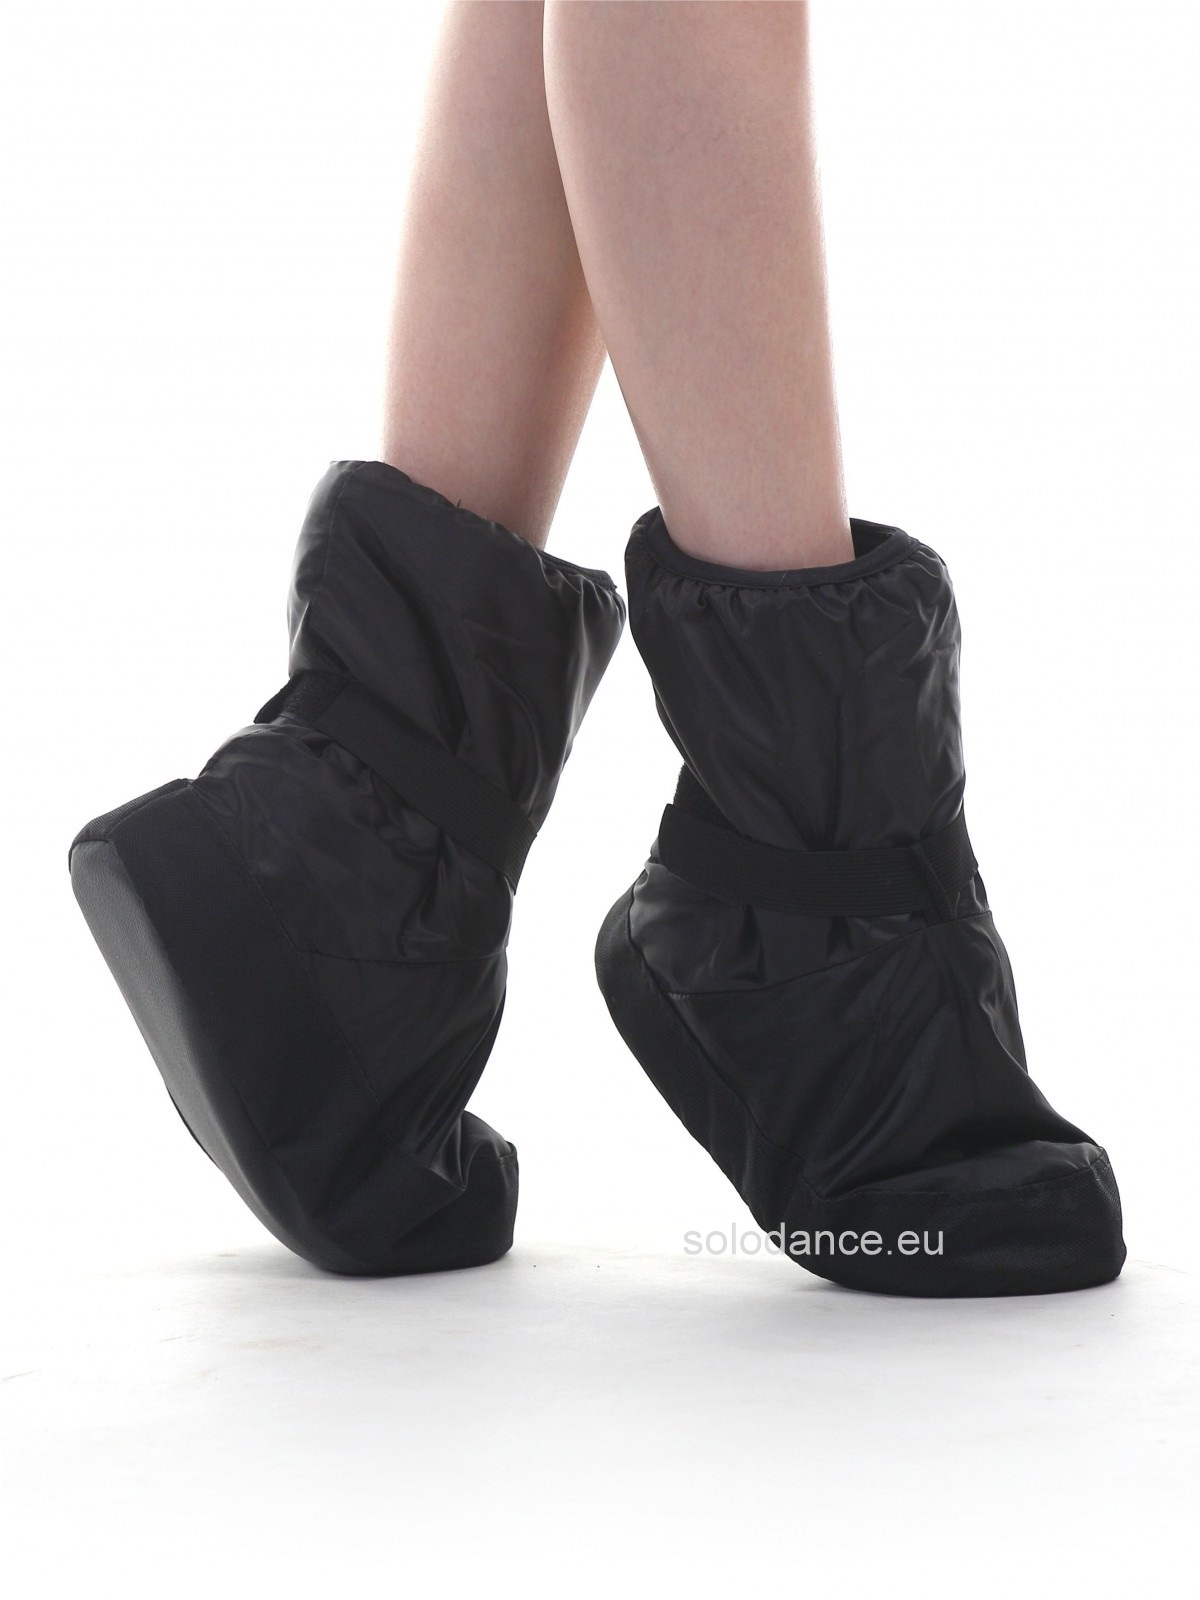 Warm-up boots BALESPO black size 26-29